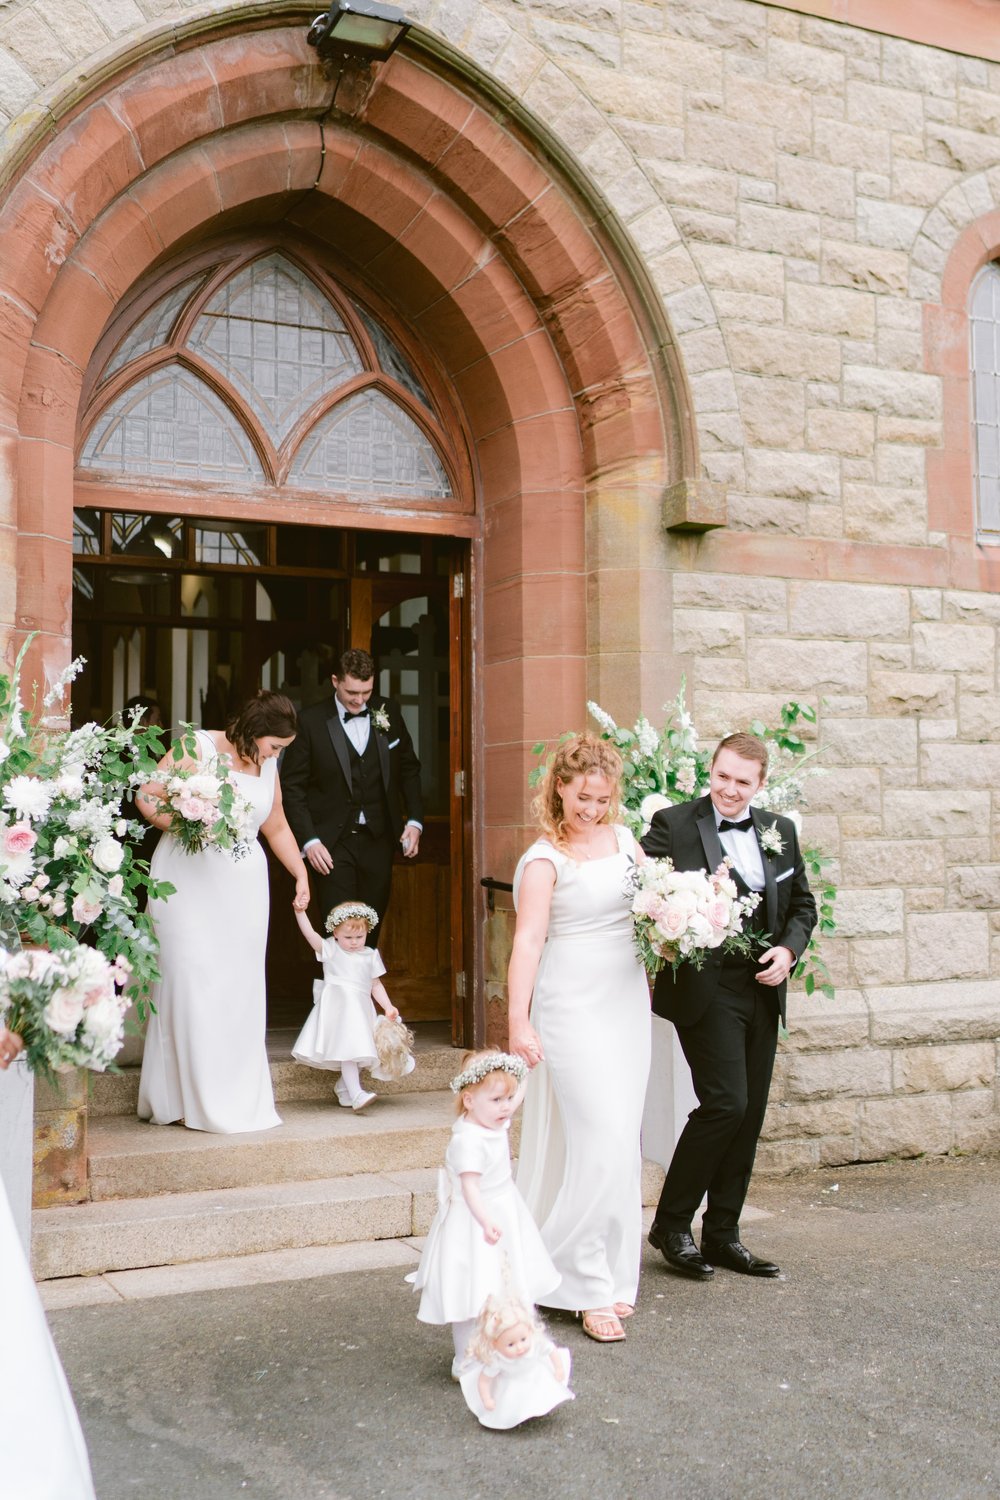 Darver Castle wedding, wedding photographer Ireland, Northern Ireland wedding venue, castle wedding venue, Hello Sugar Photography (71).jpg